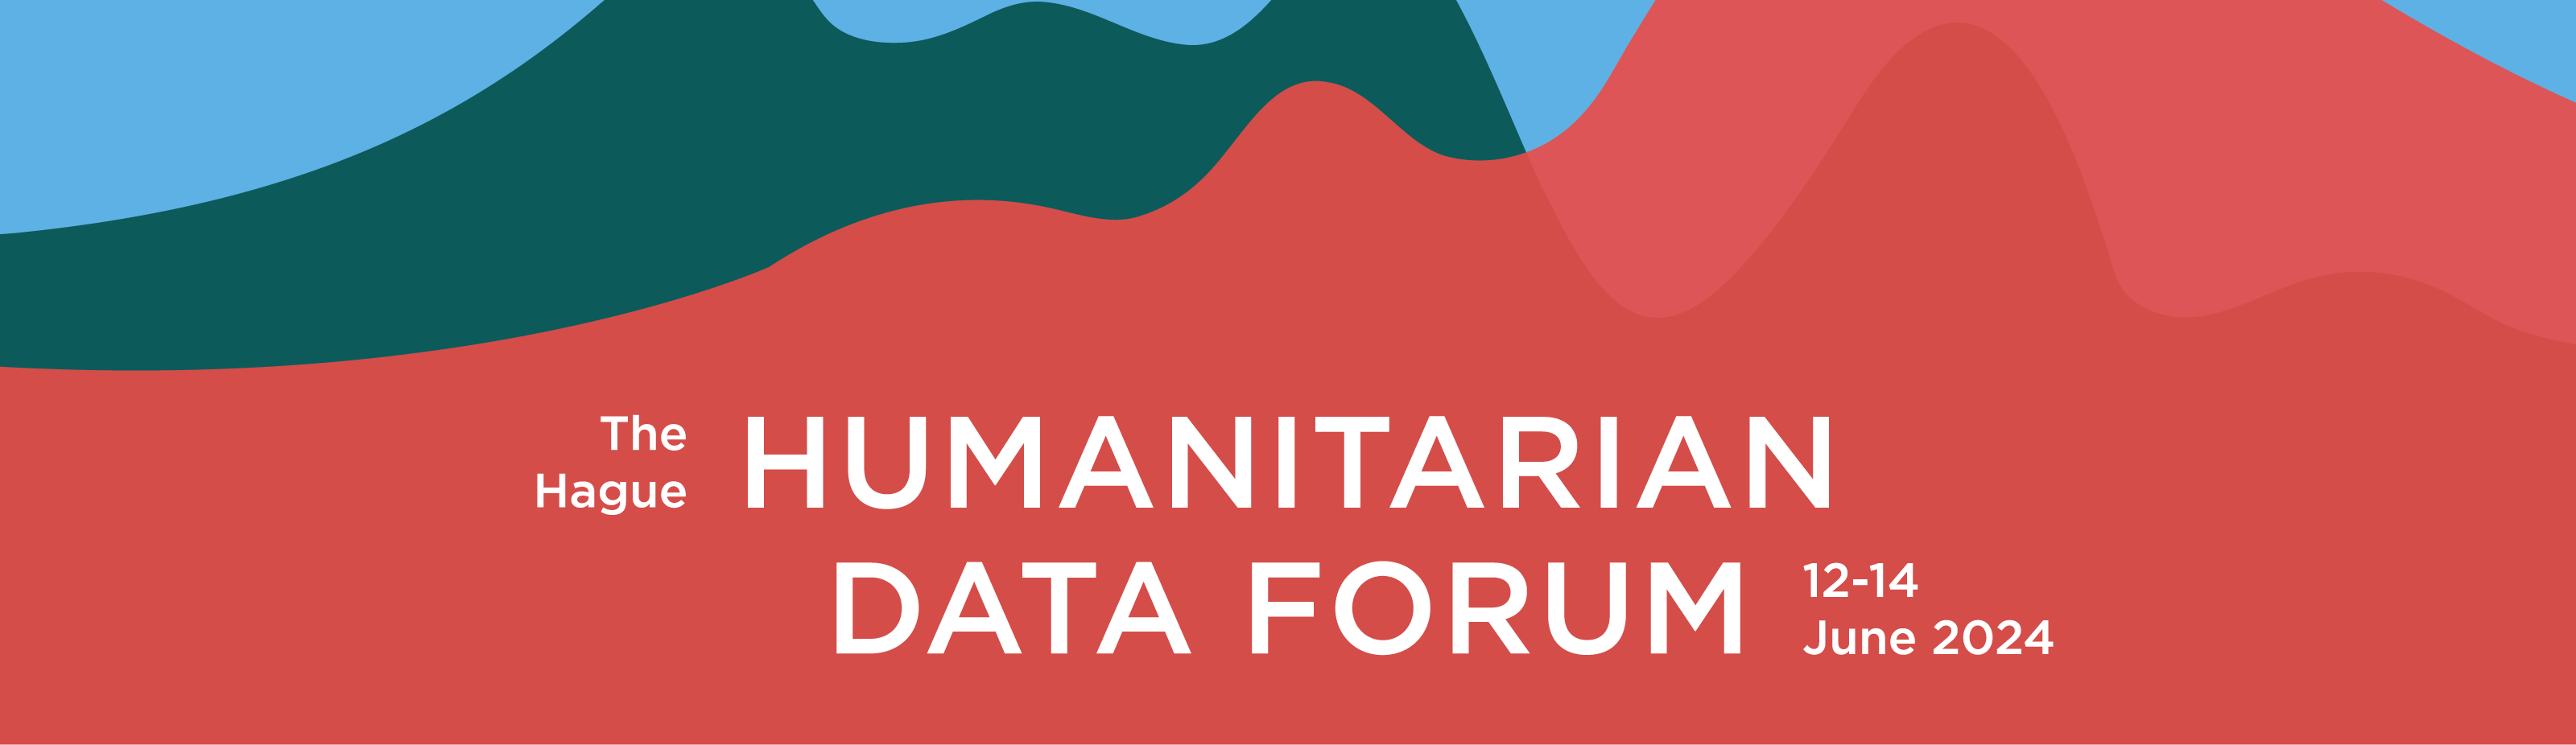 Humanitarian Data Forum